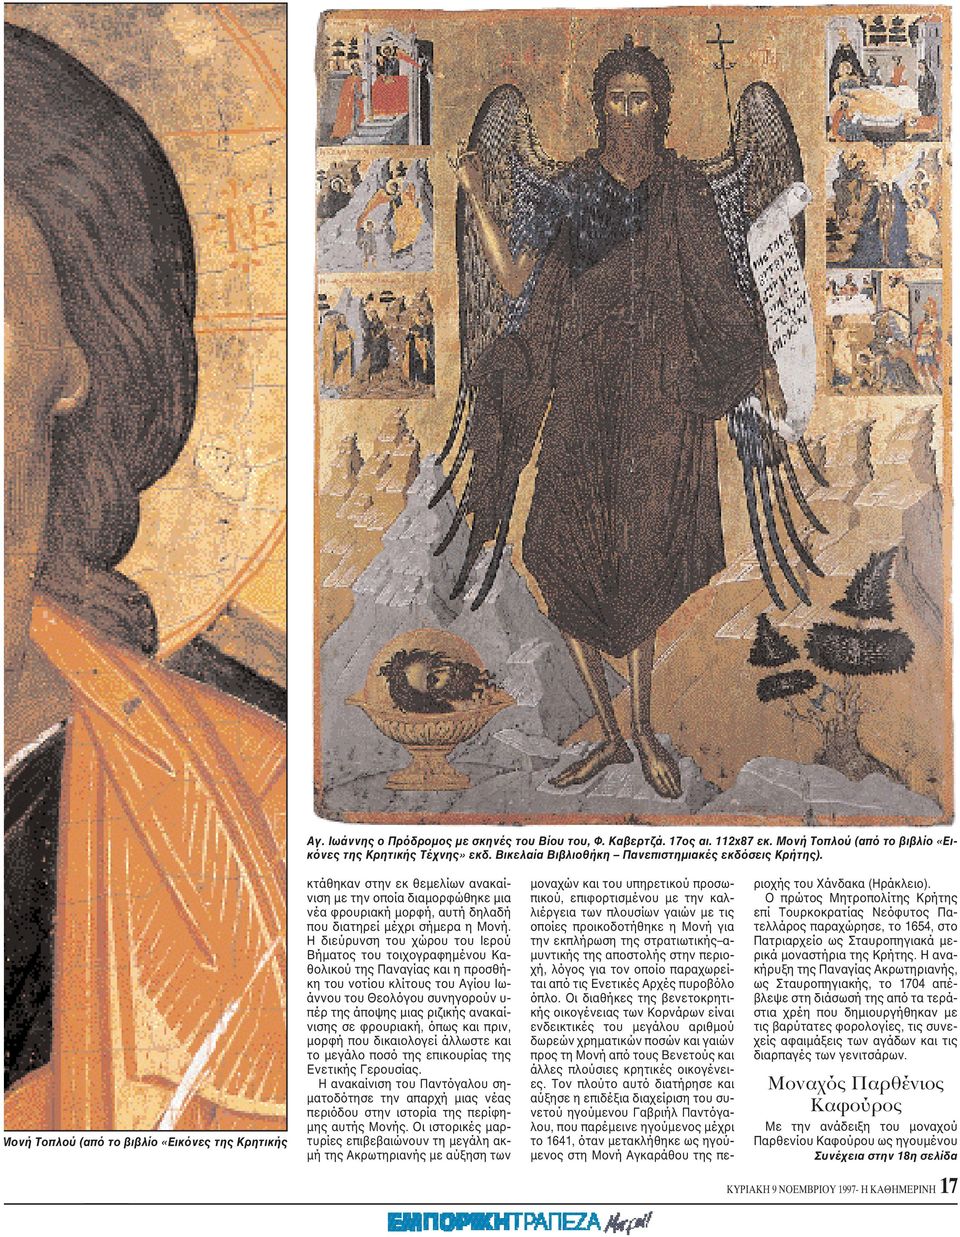 H διεύρυνση του χώρου του Iερού Bήματος του τοιχογραφημένου Kαθολικού της Παναγίας και η προσθήκη του νοτίου κλίτους του Aγίου Iωάννου του Θεολόγου συνηγορούν υ- πέρ της άποψης μιας ριζικής